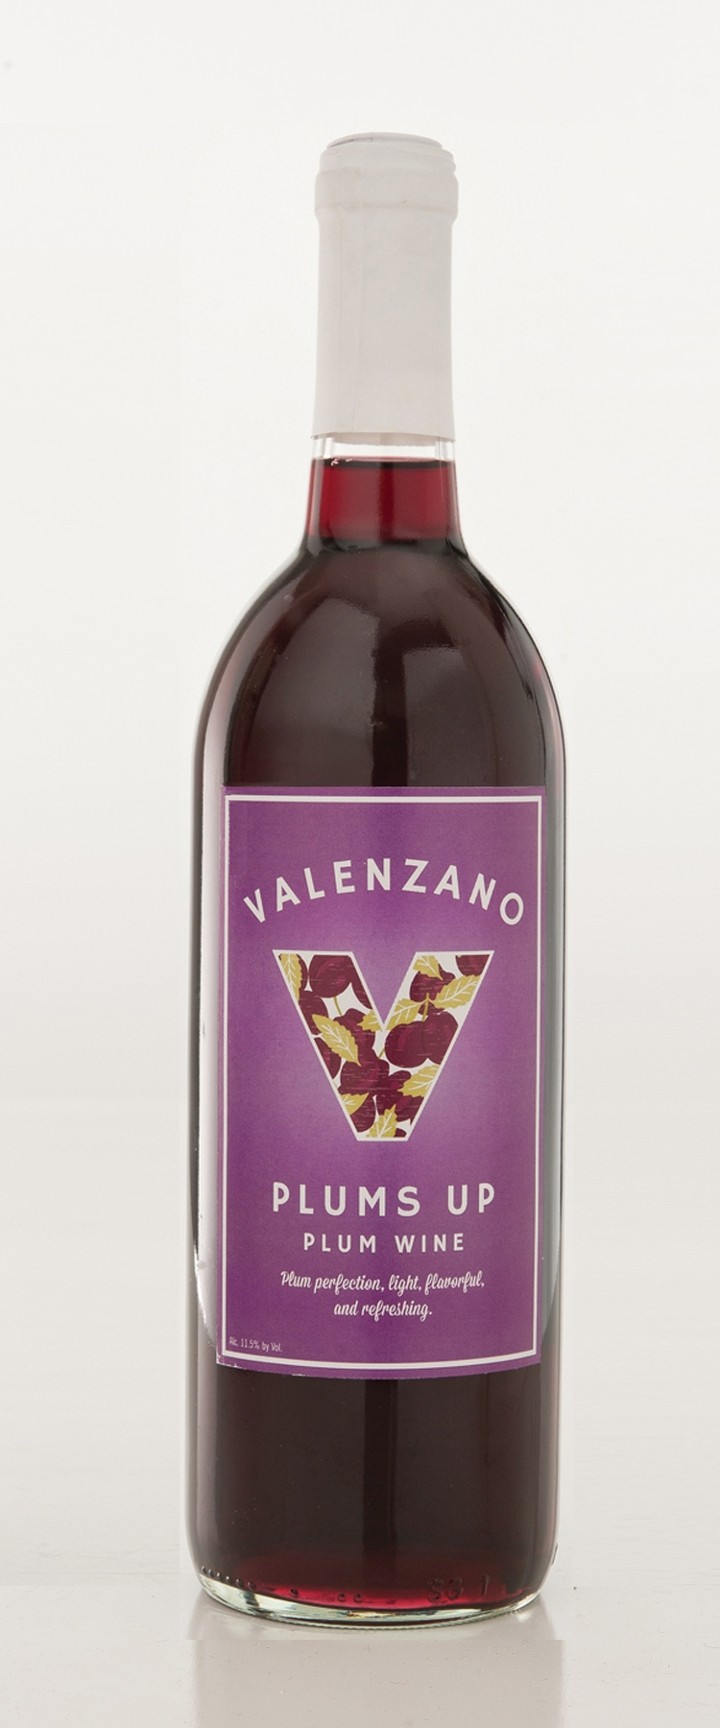 Harvest: Plums Up Plum Wine Bottle